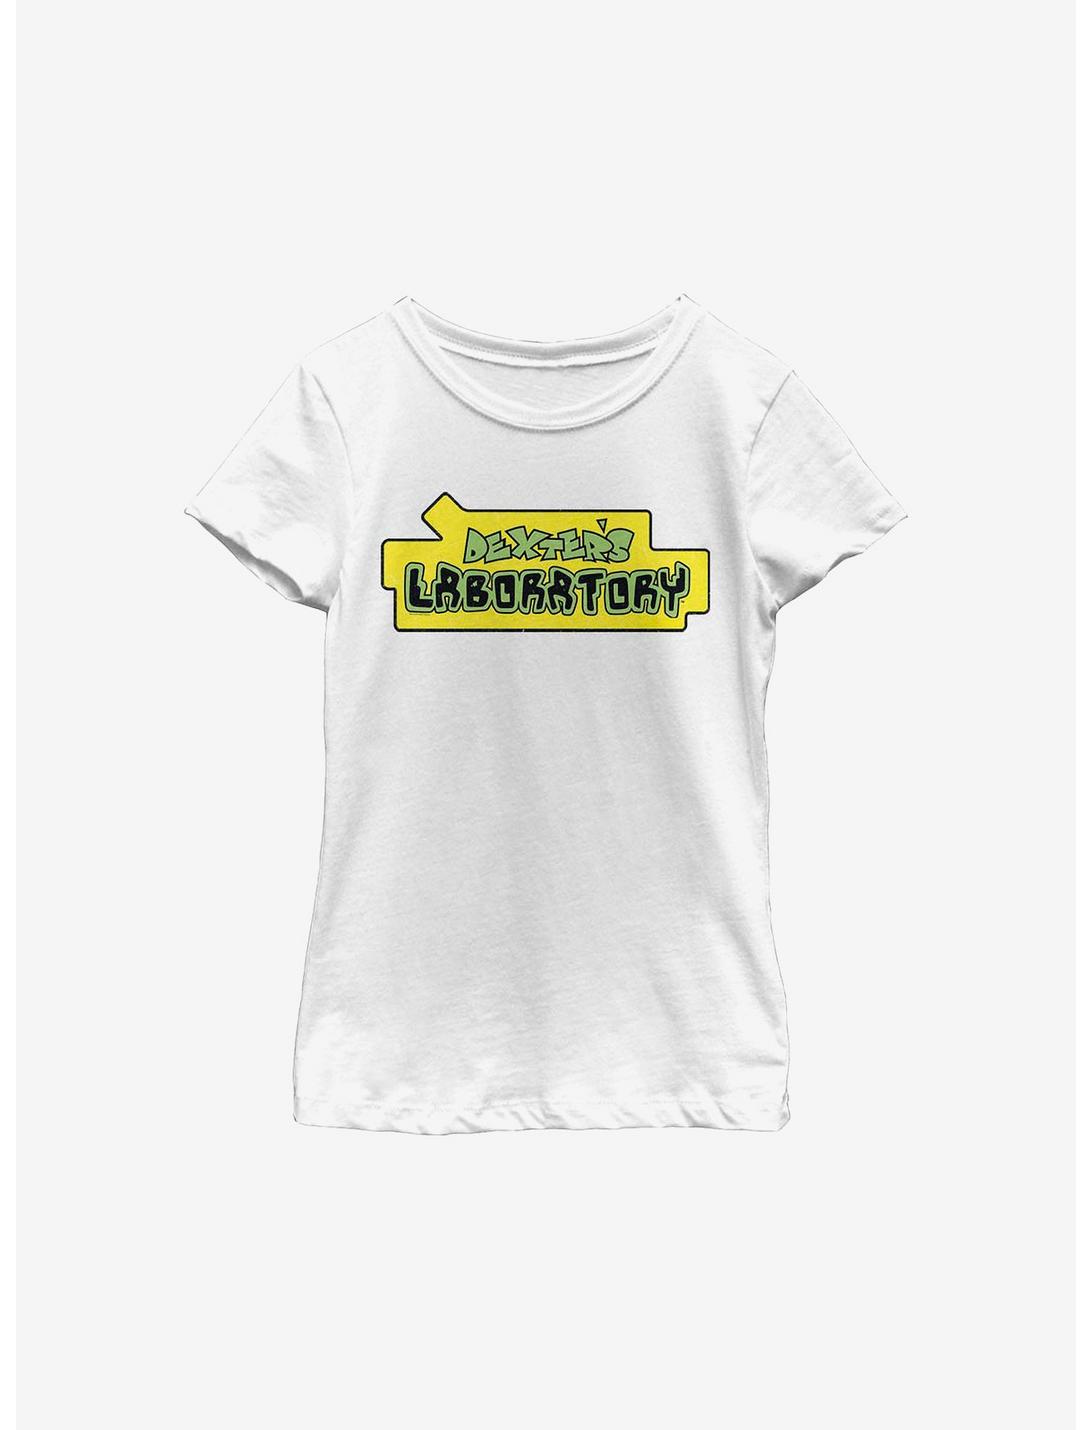 Dexter's Laboratory Logo Youth Girls T-Shirt, WHITE, hi-res